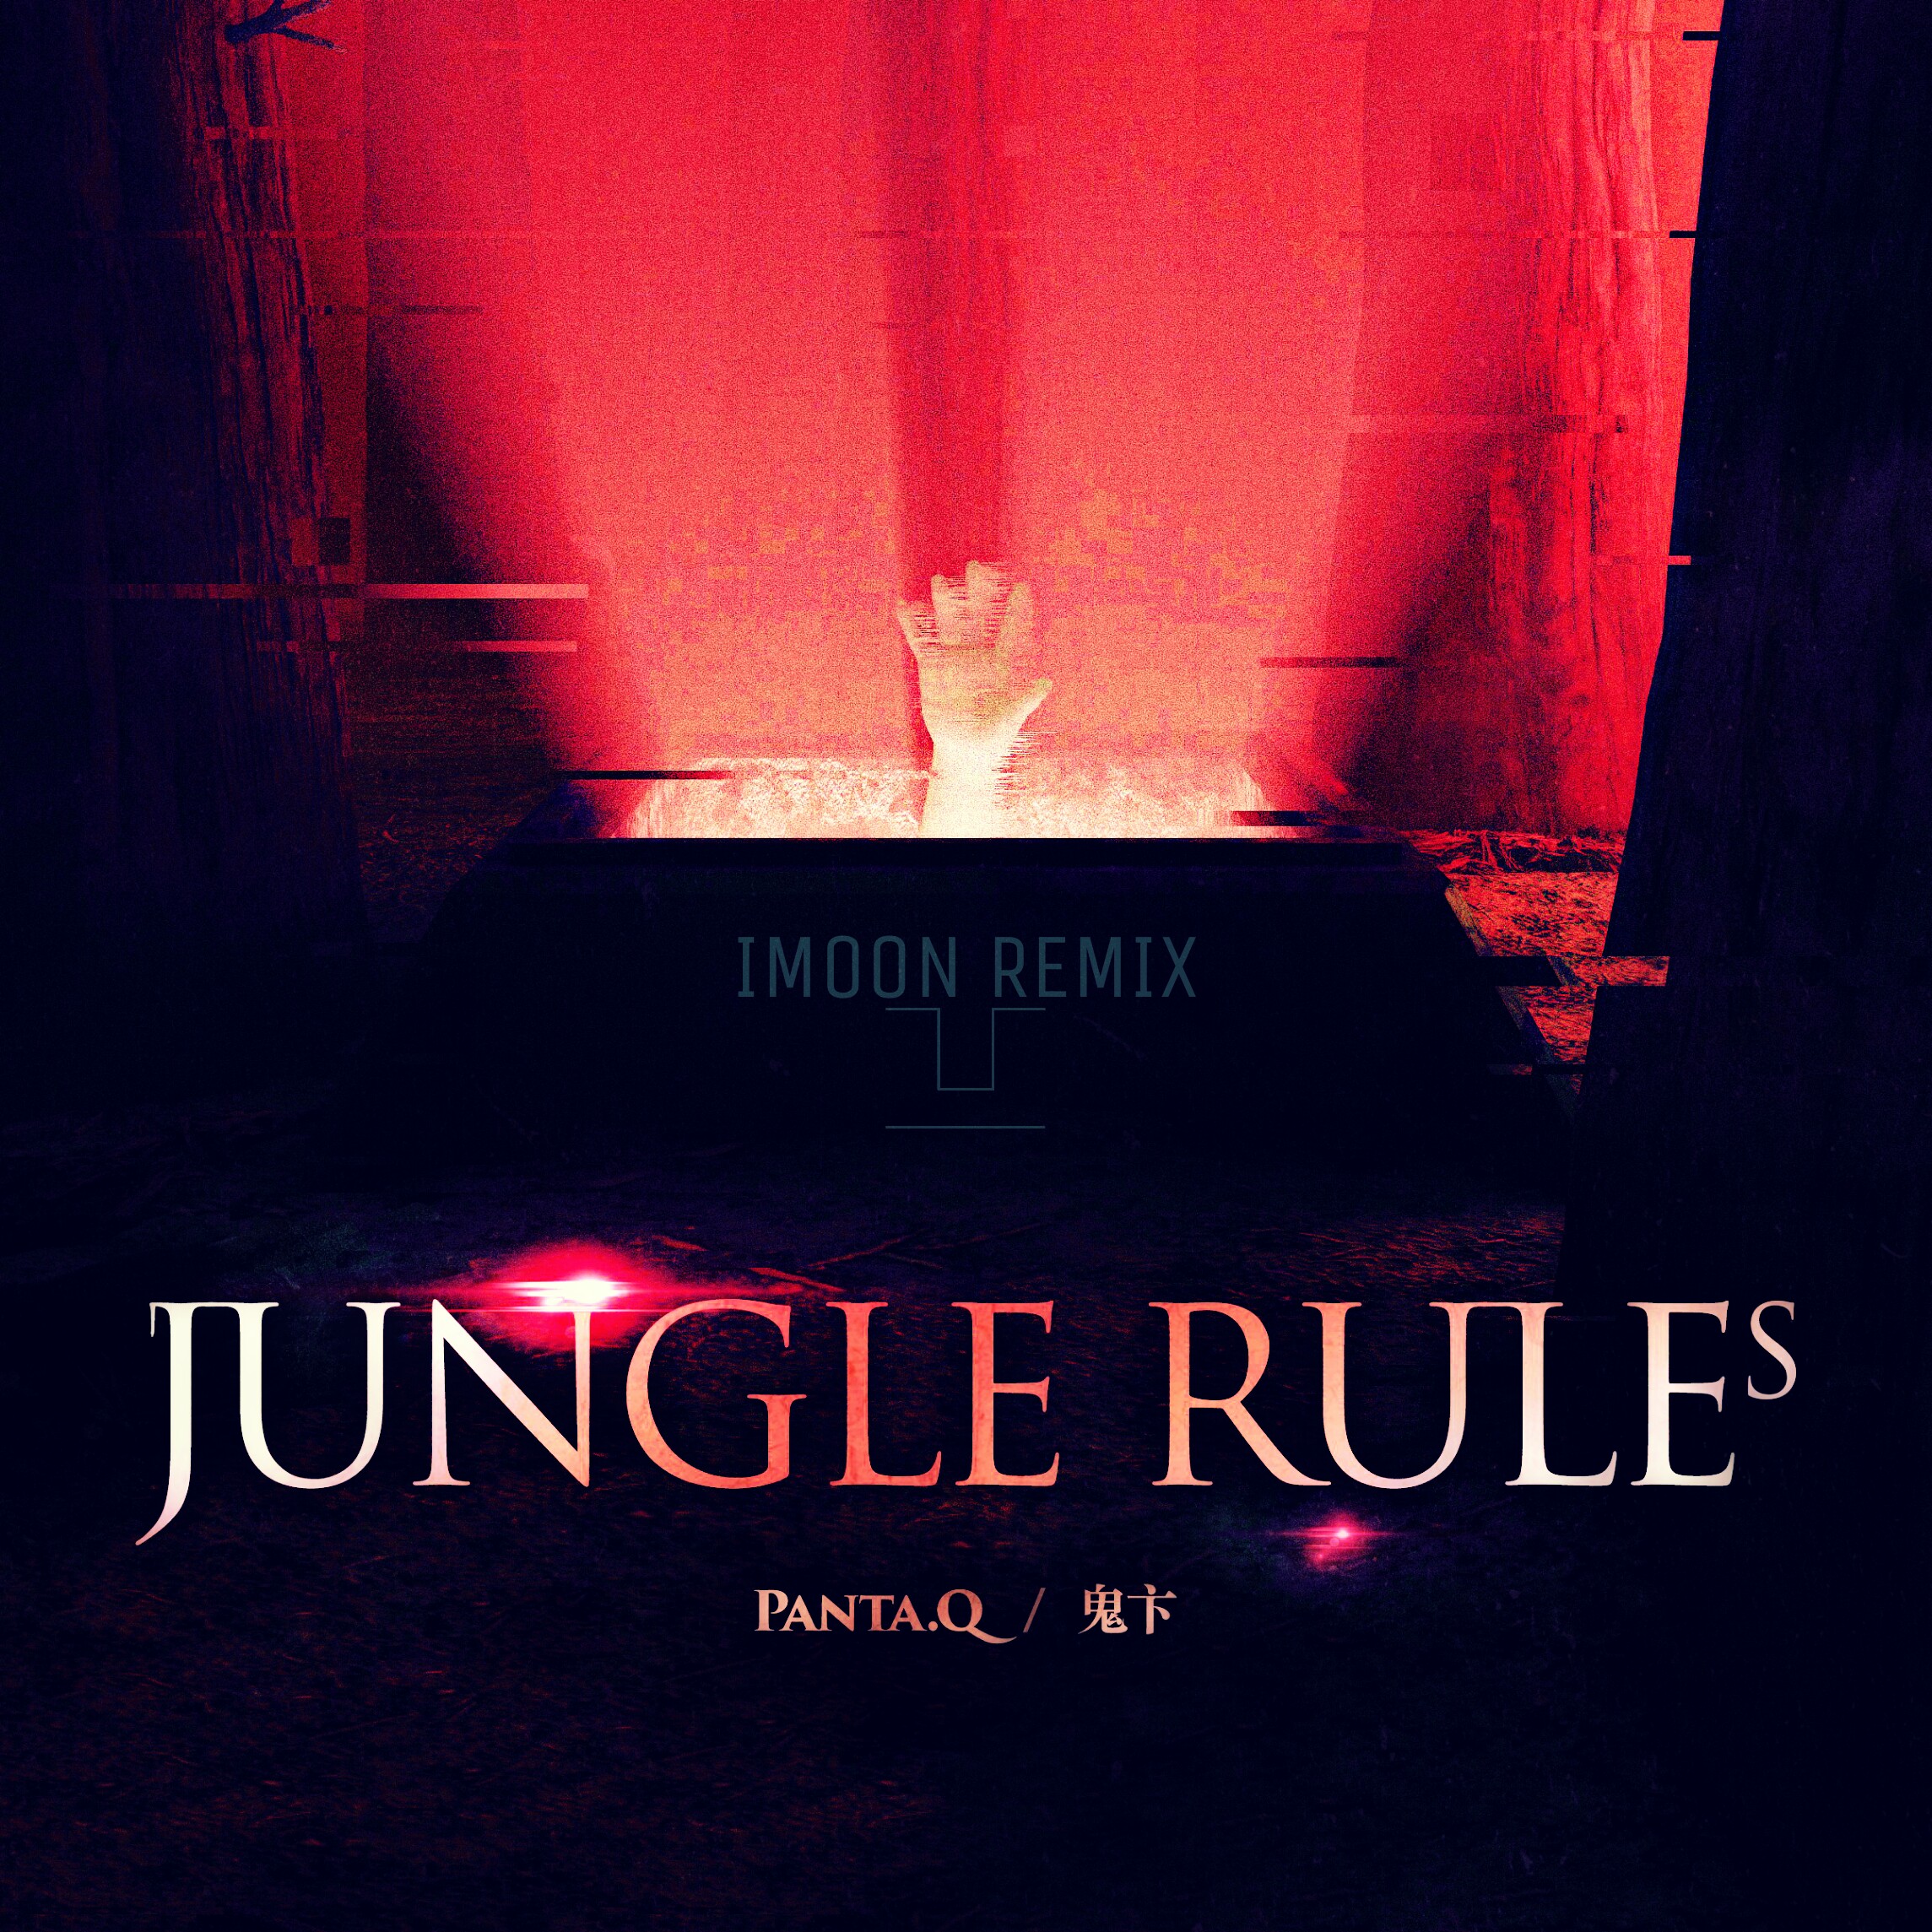 Jungle  Rules  iMoon  Remix